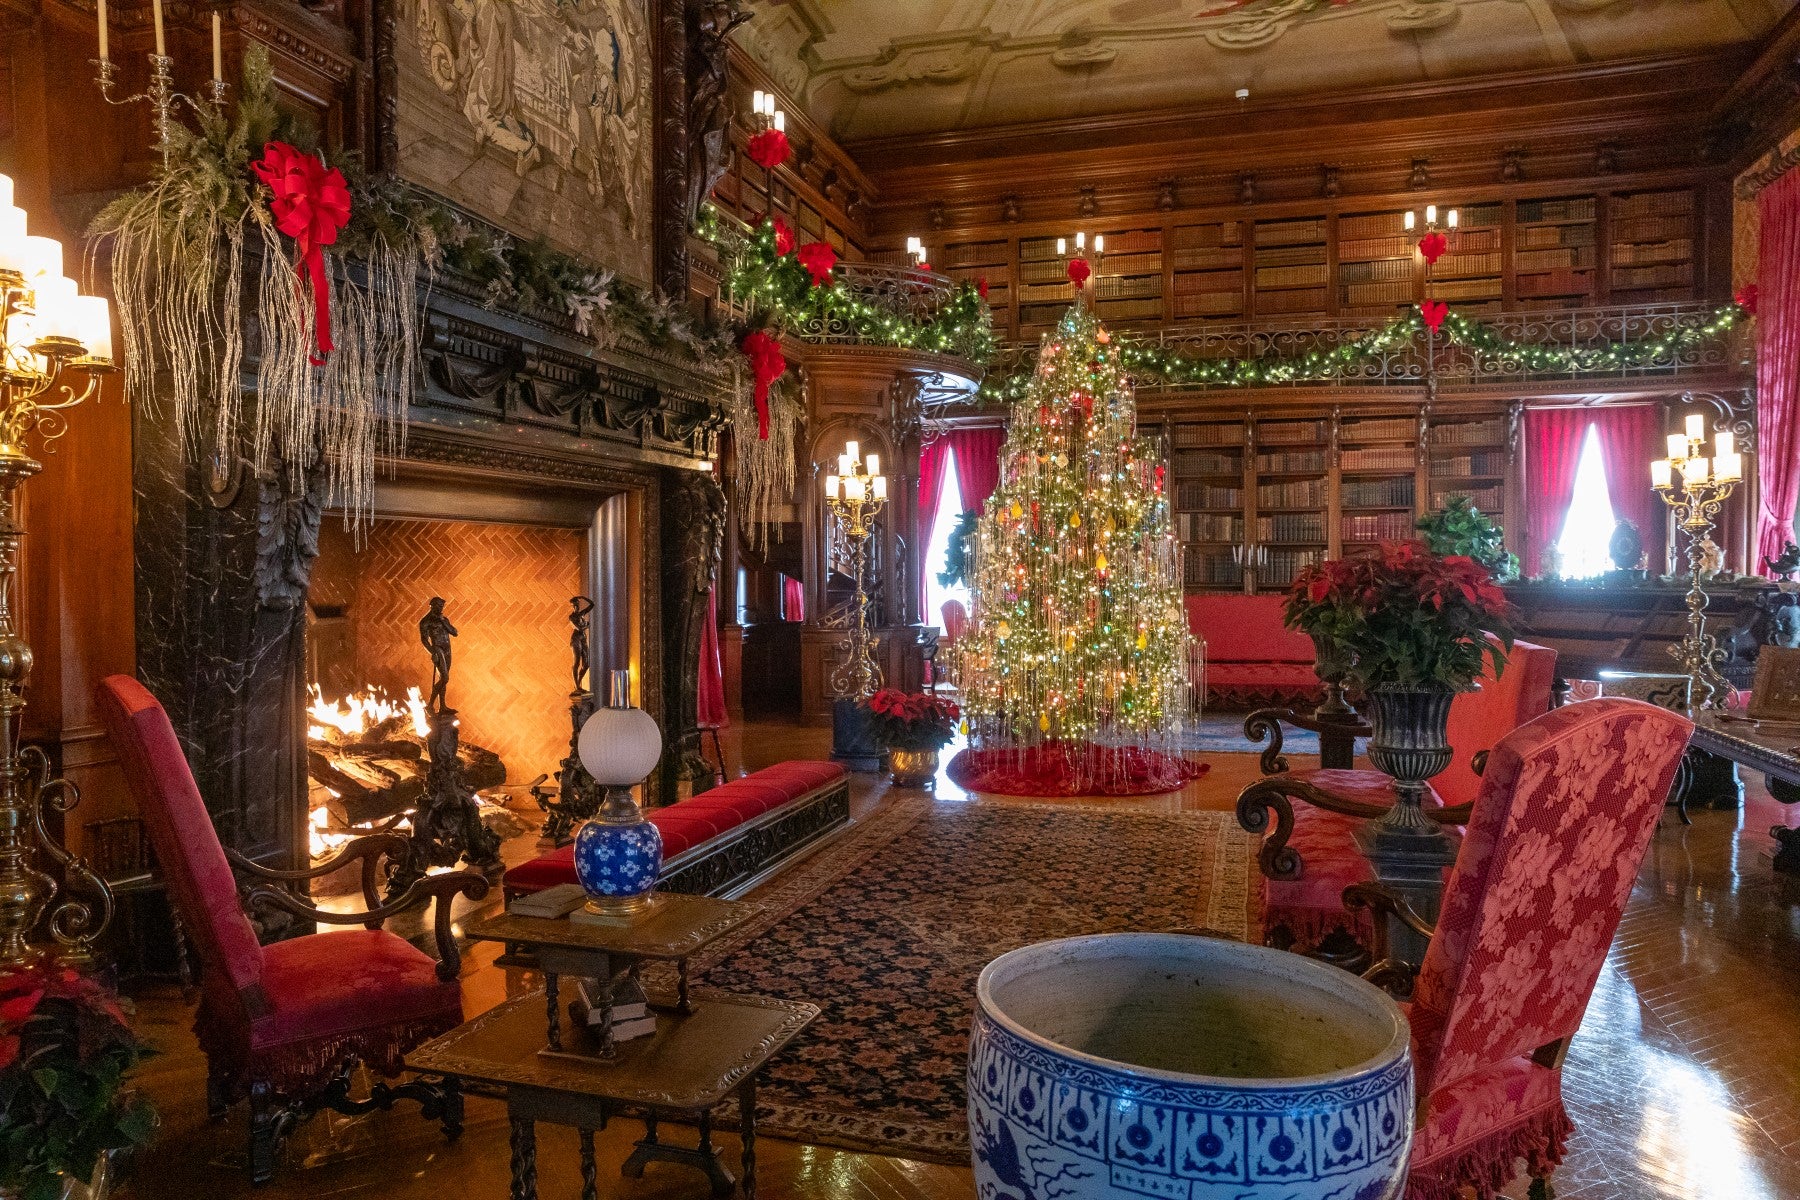 Christmas Decorations, Holiday Decor, Lights & Trees